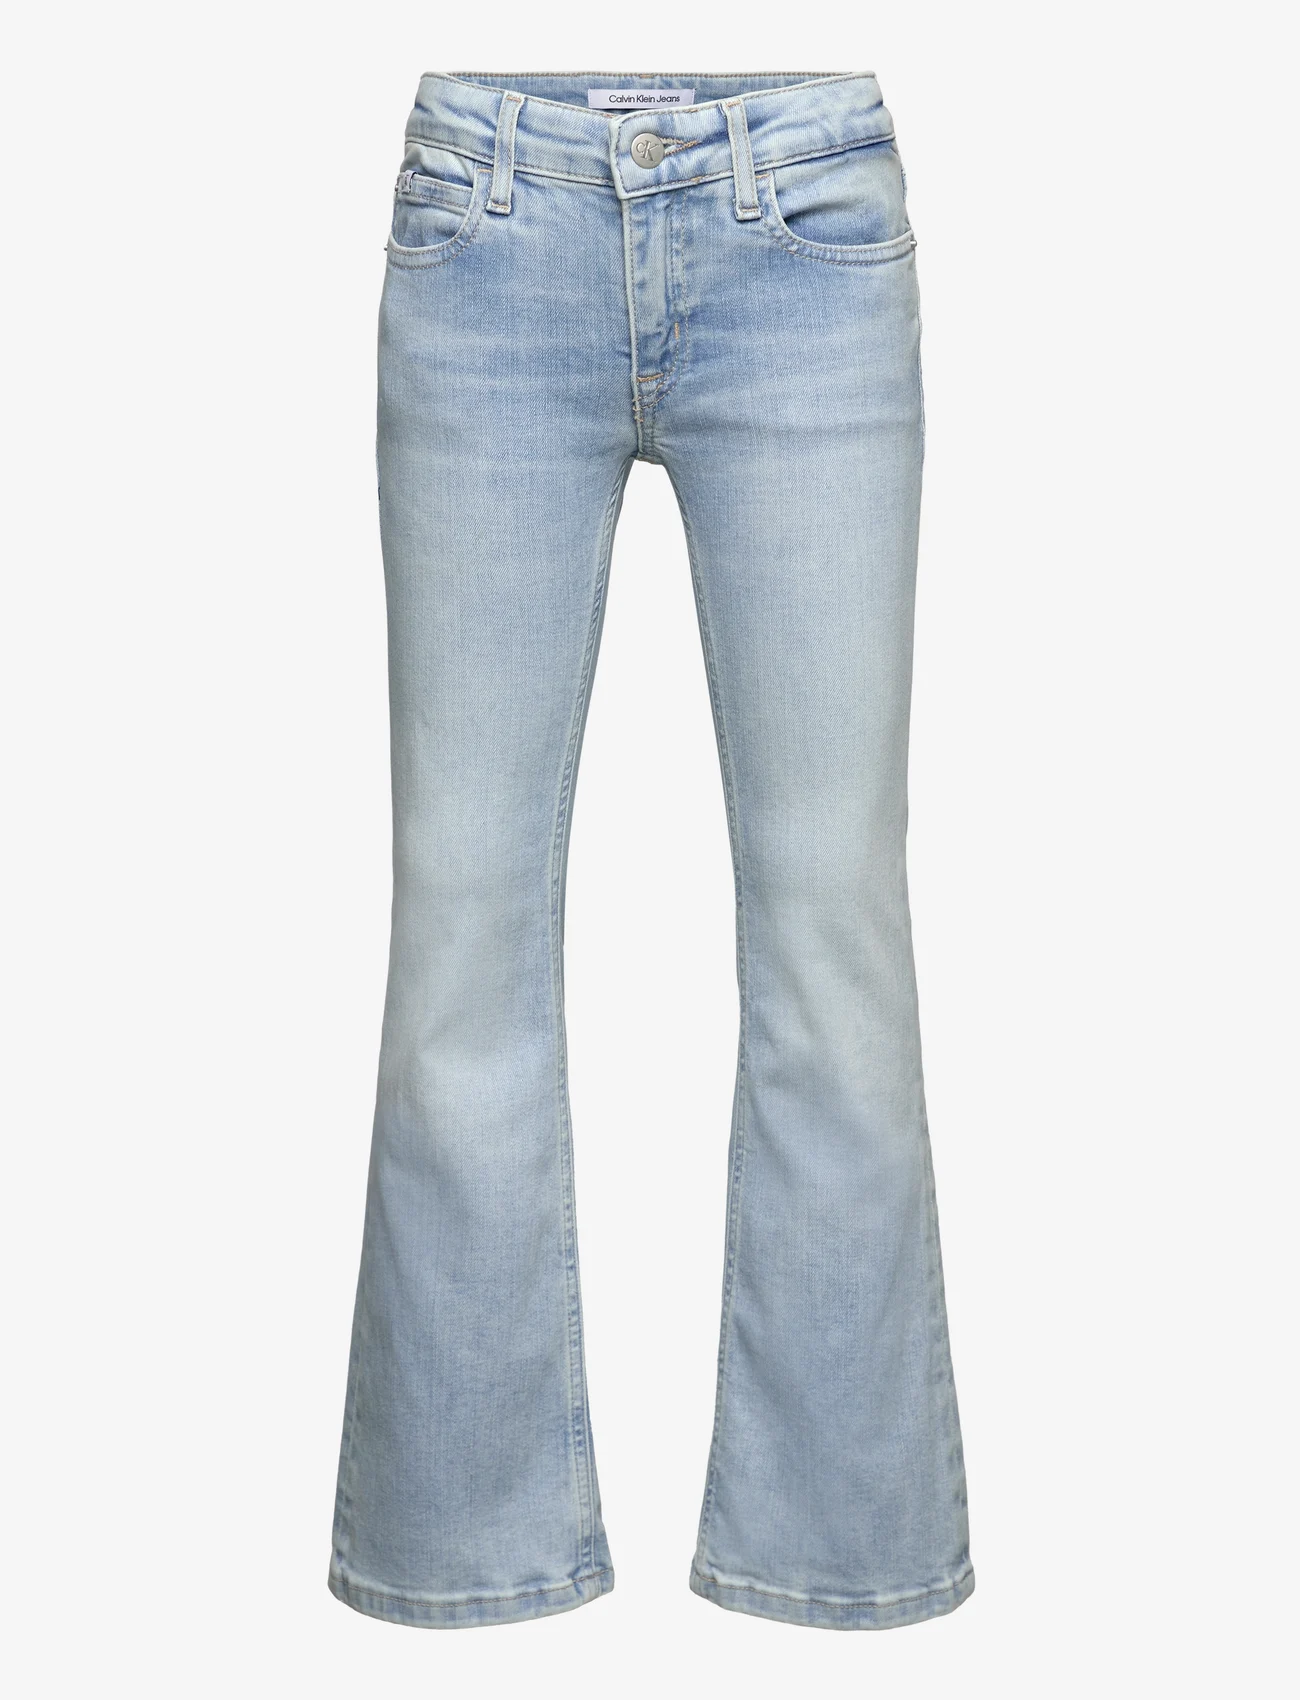 Calvin Klein - MR FLARE LIGHT SKY BLUE STR - bootcut jeans - light sky blue stretch - 0